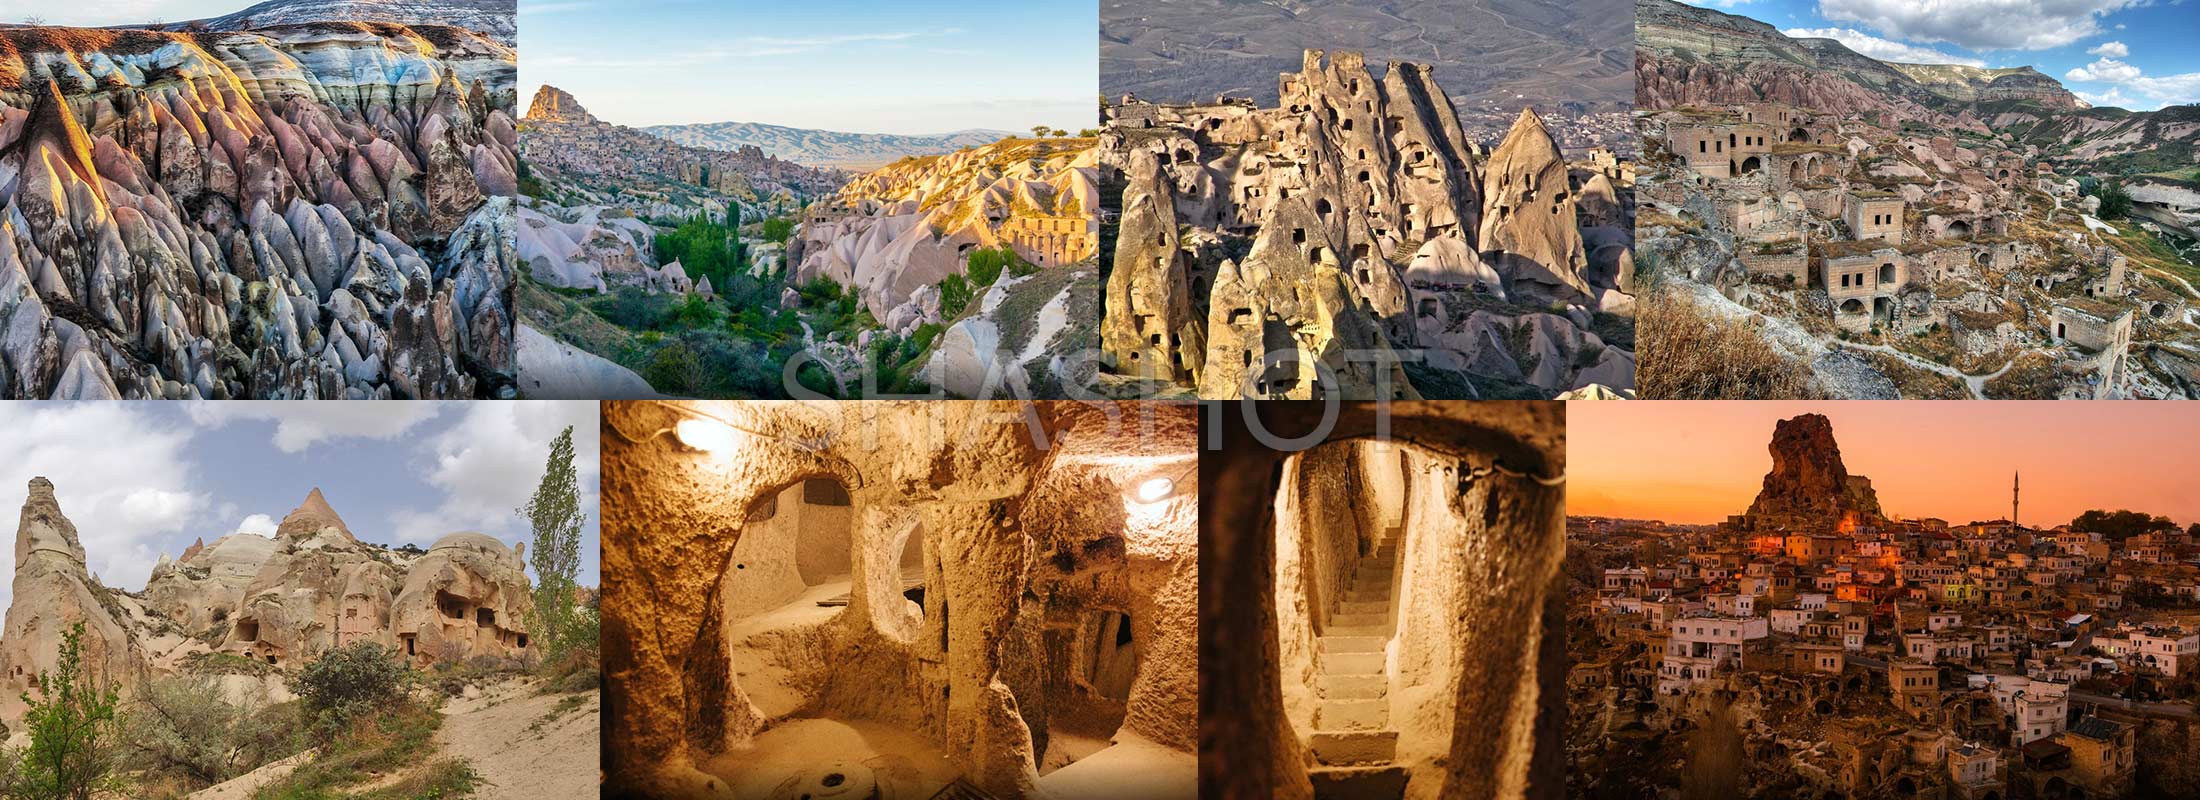 turquia-excursion-tours-7-dias-estambul-santa-sofia-museo-azul-mezquita-capadocia-virgen-maria-casa-efeso-pamukkale-hierapolis-sirince